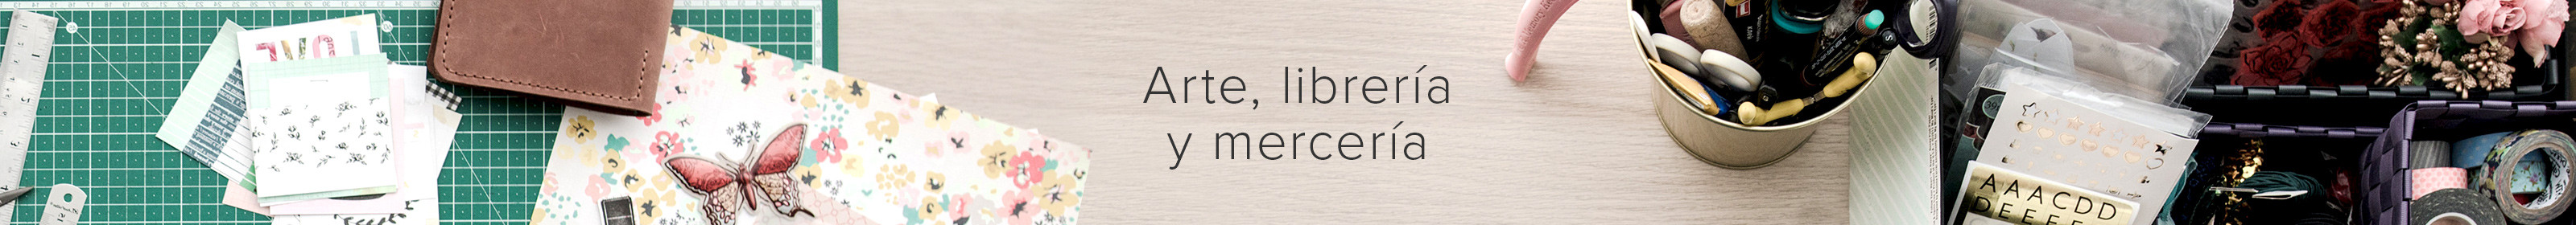 ARTE_LIBRERIA_Y_MERCERIA 